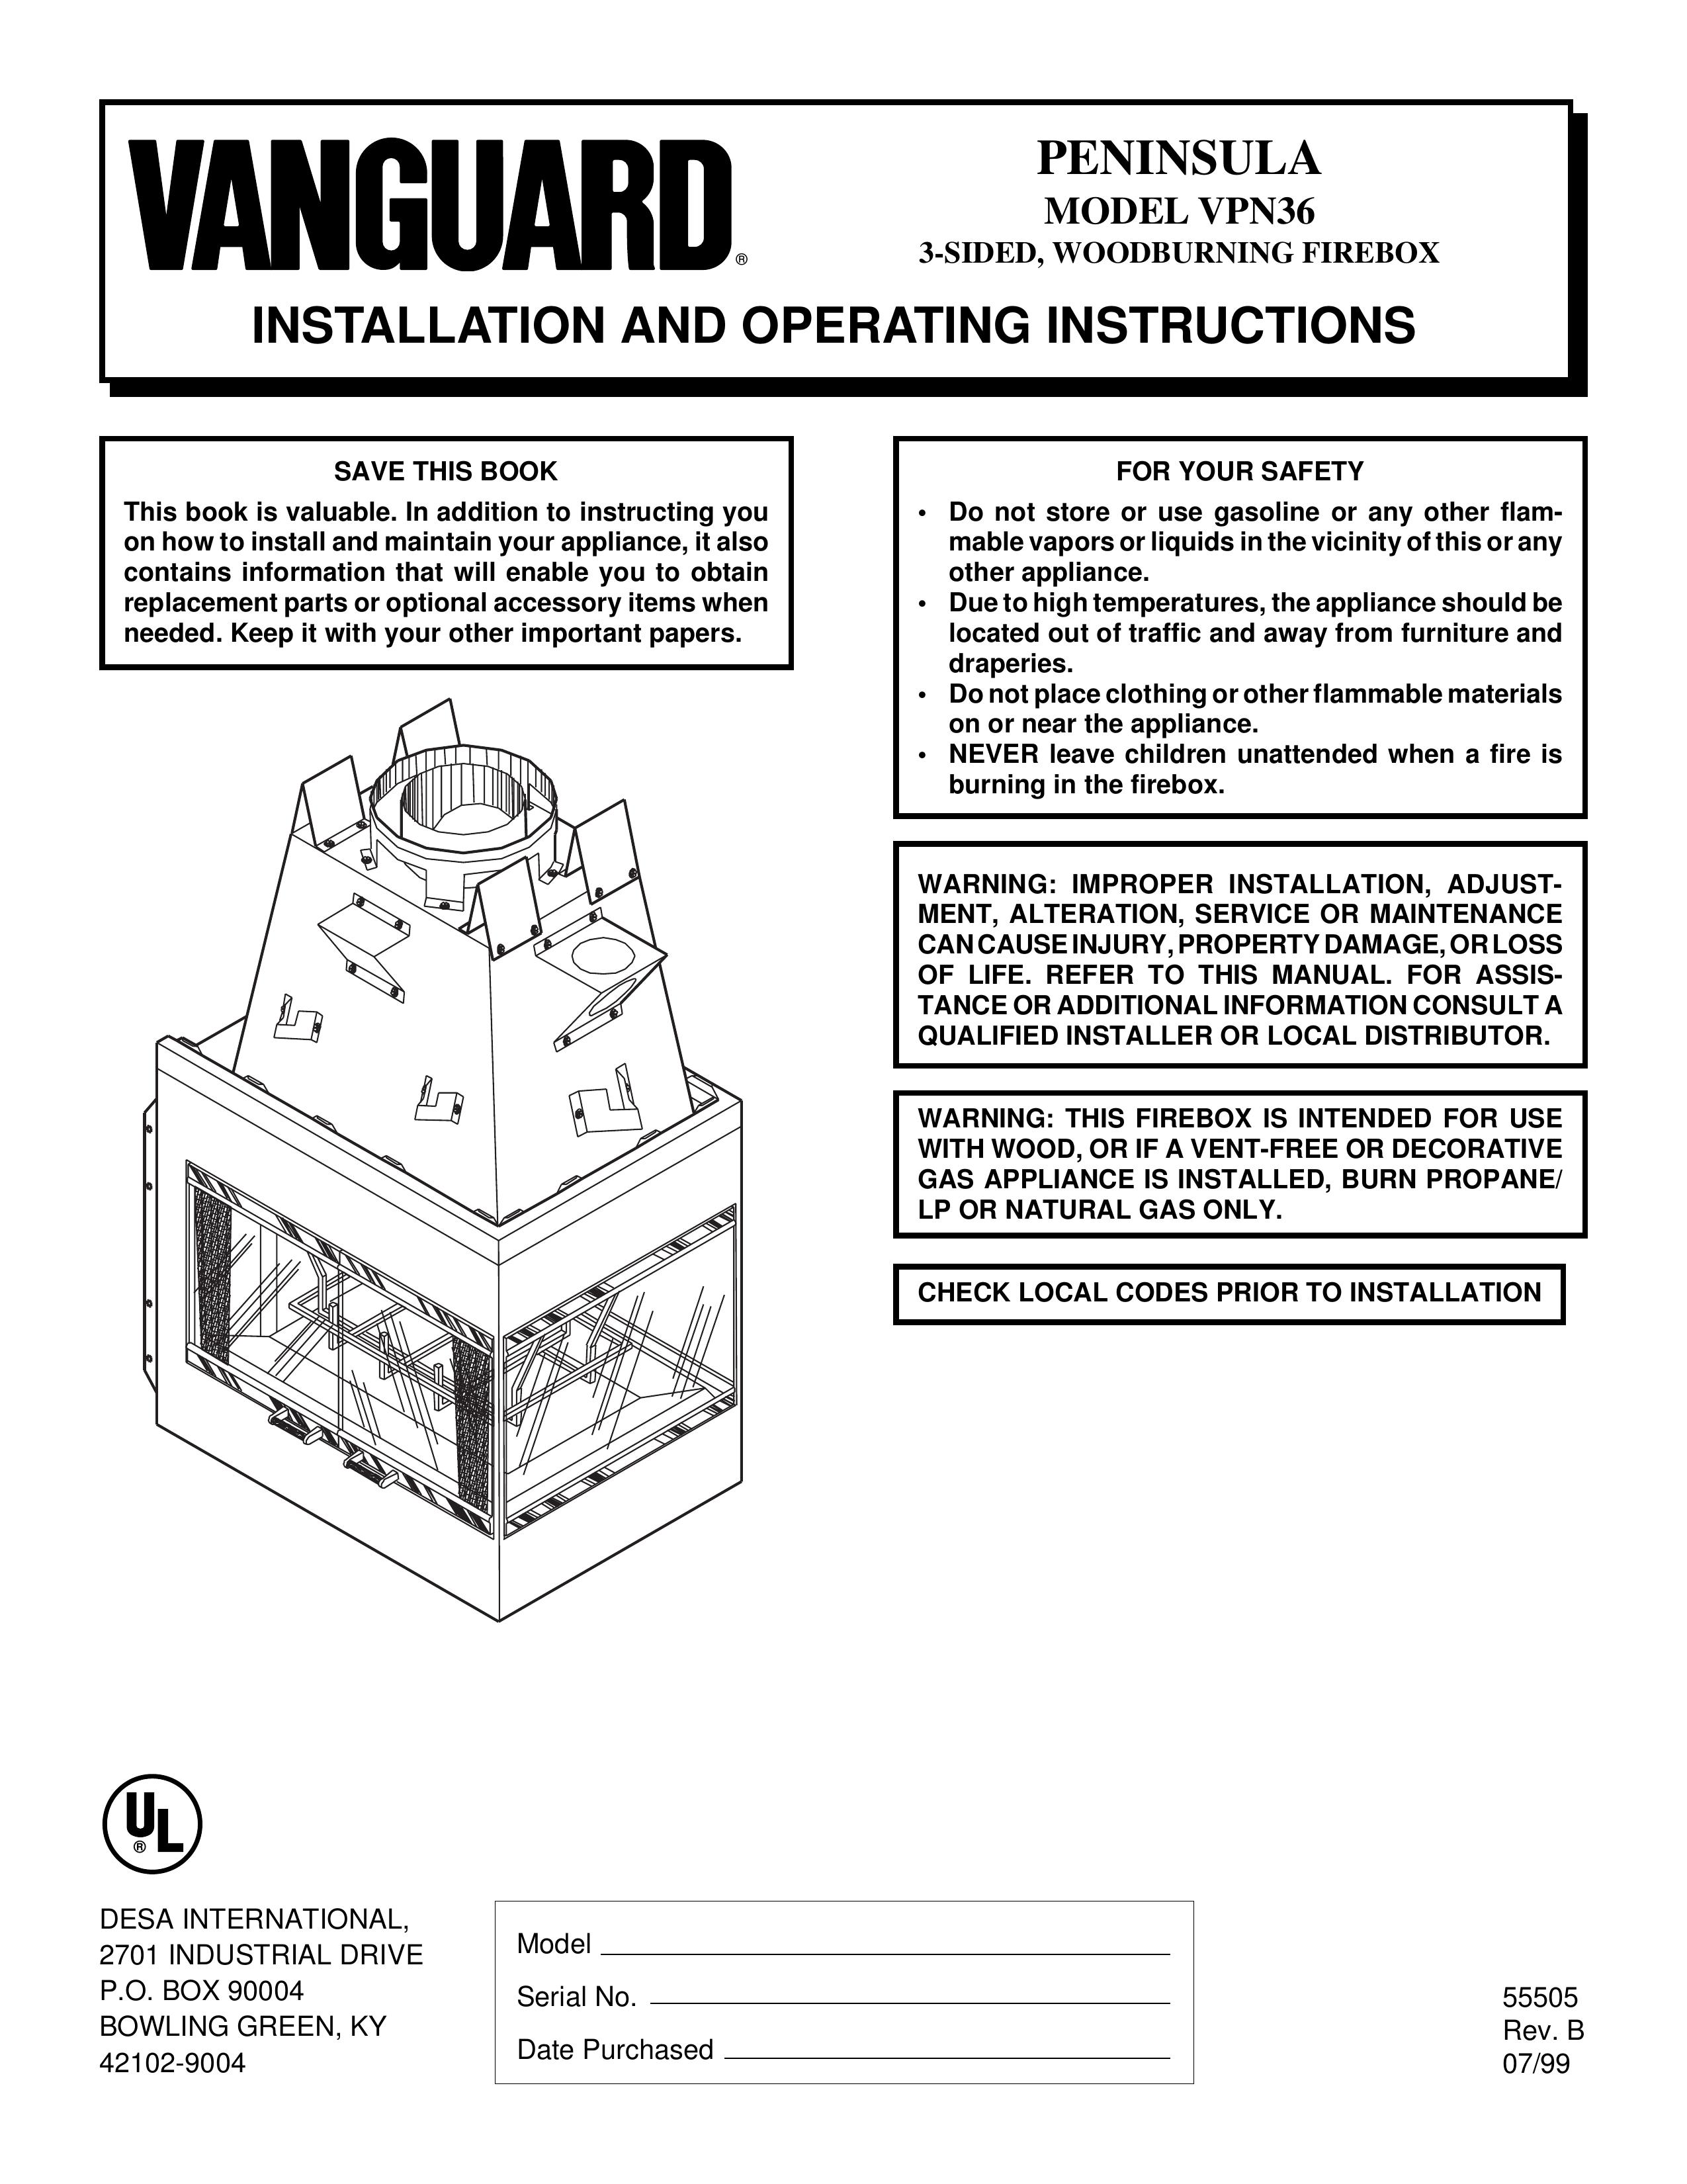 Desa VPN36 3-SIDED Fire Pit User Manual